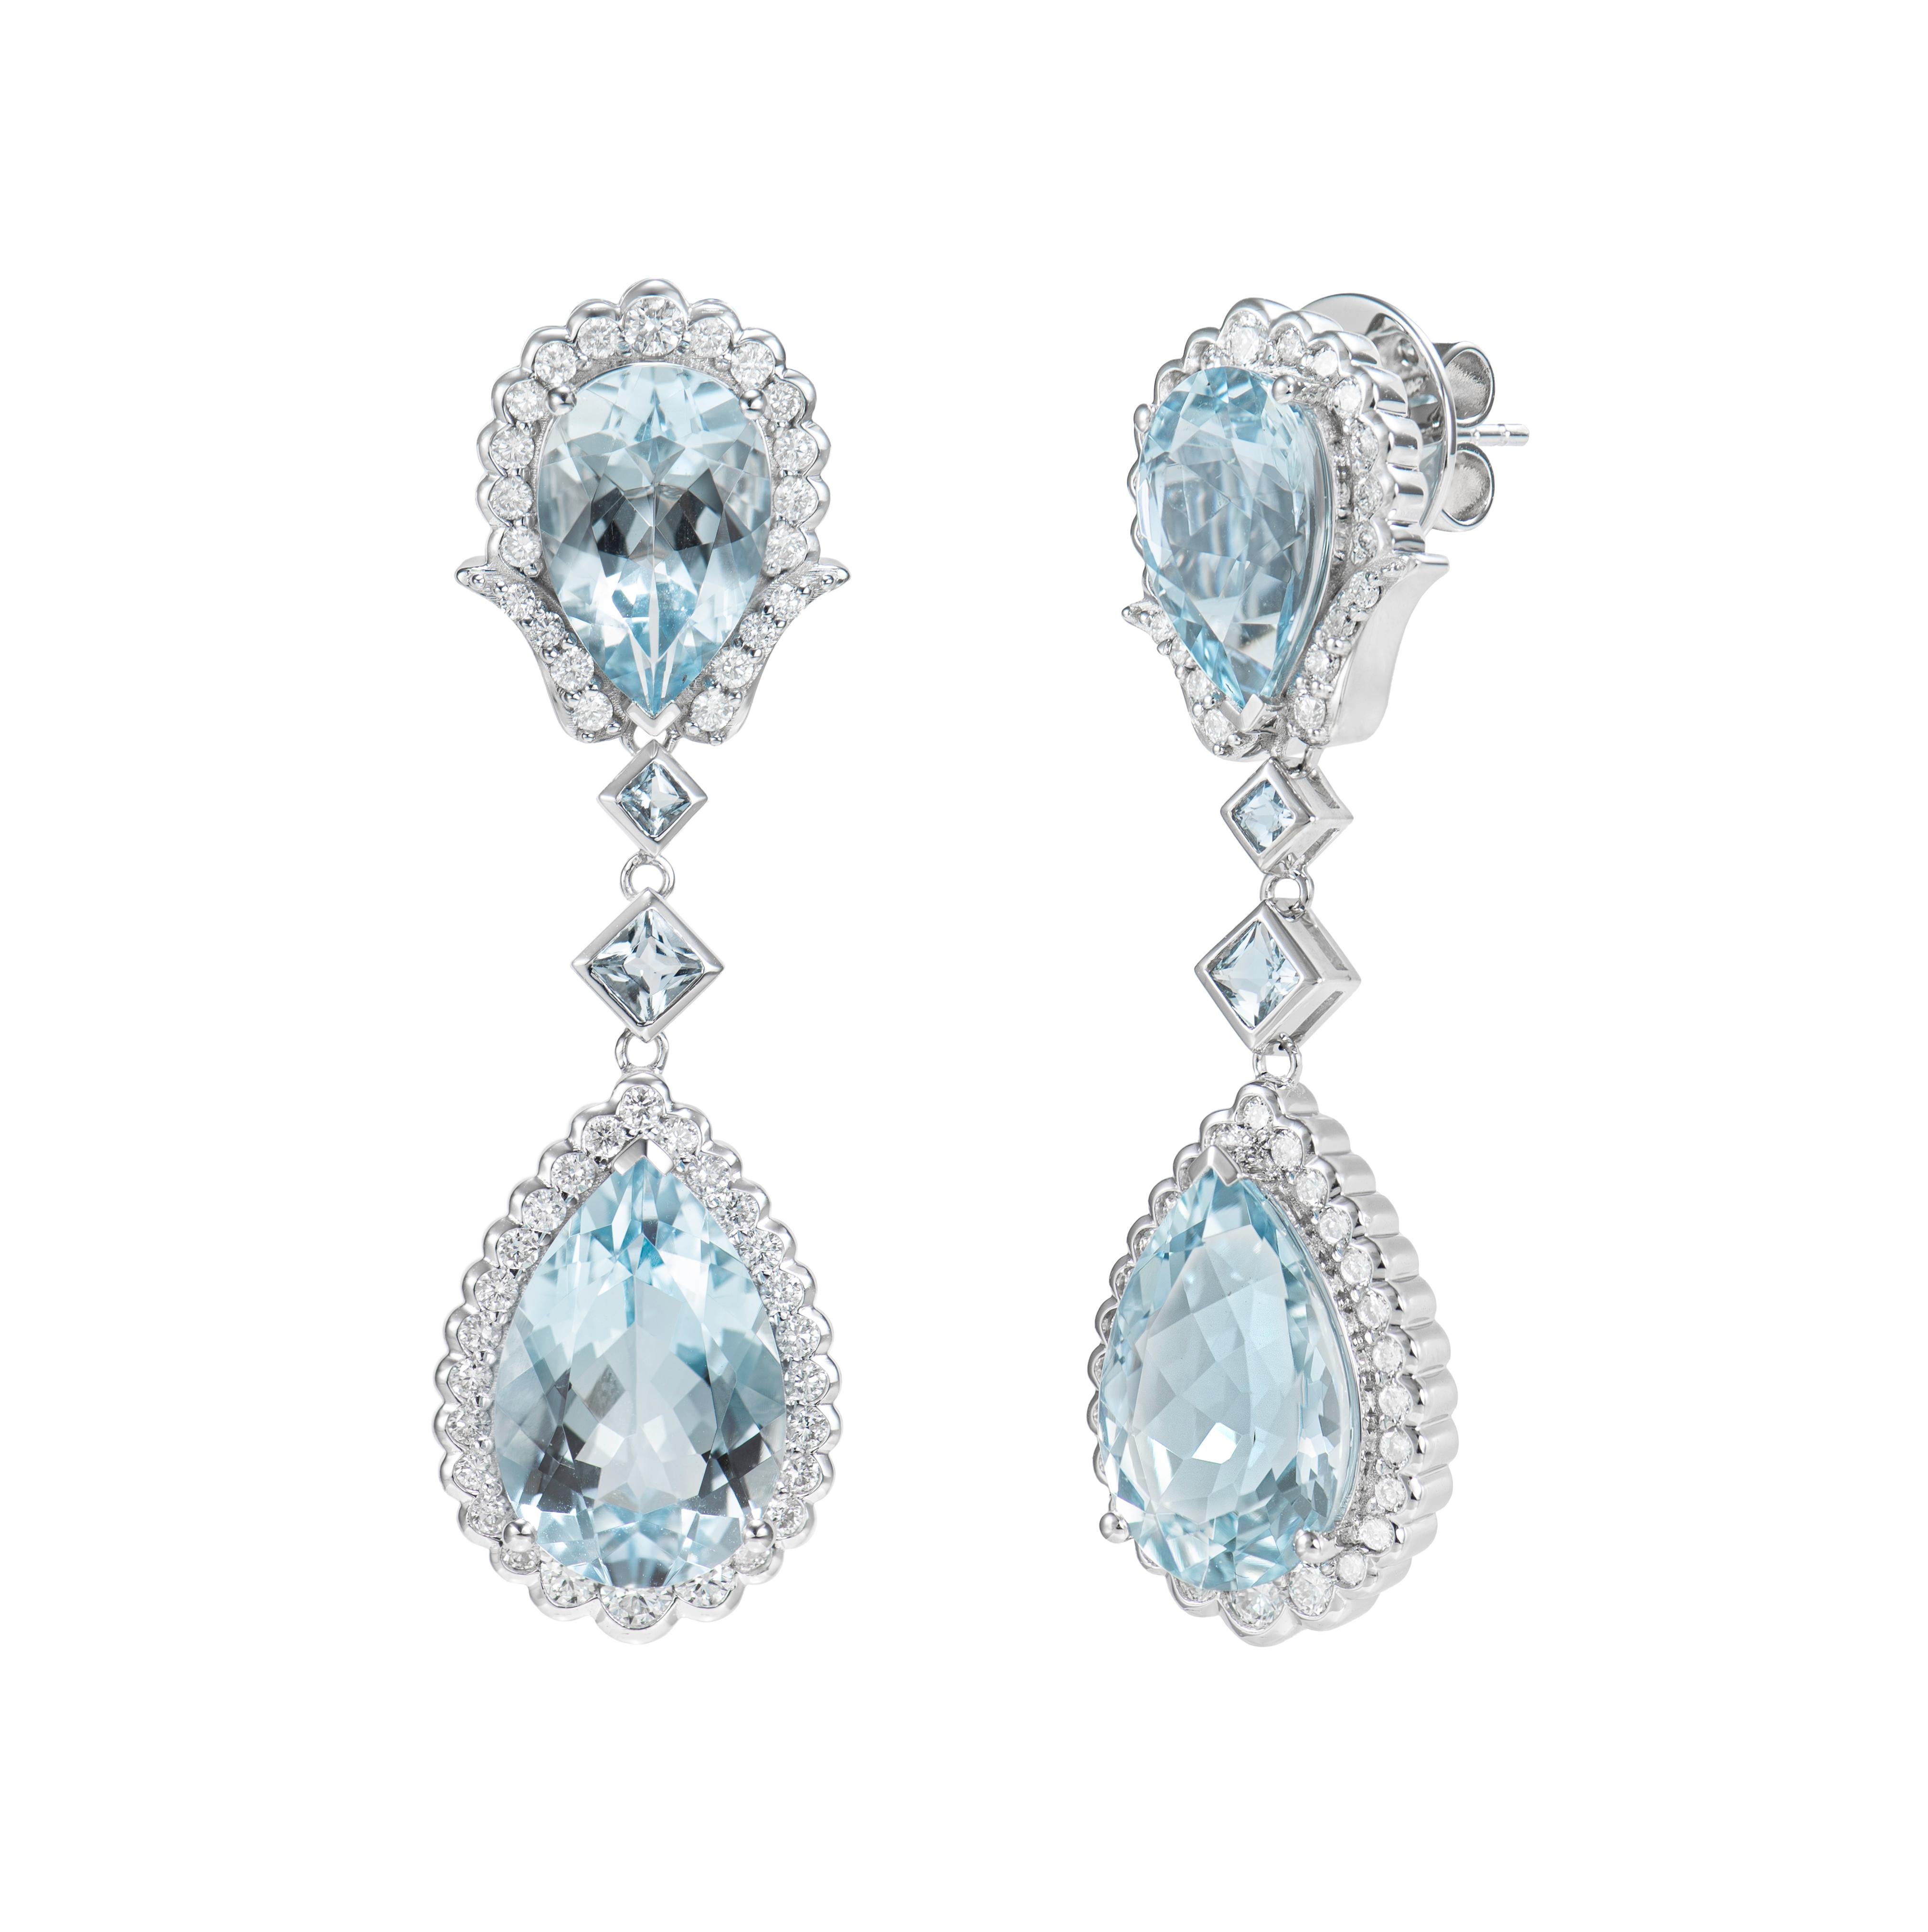 Pear Cut Aquamarine and White Diamond Teardrops Earring in 18 Karat White Gold. For Sale